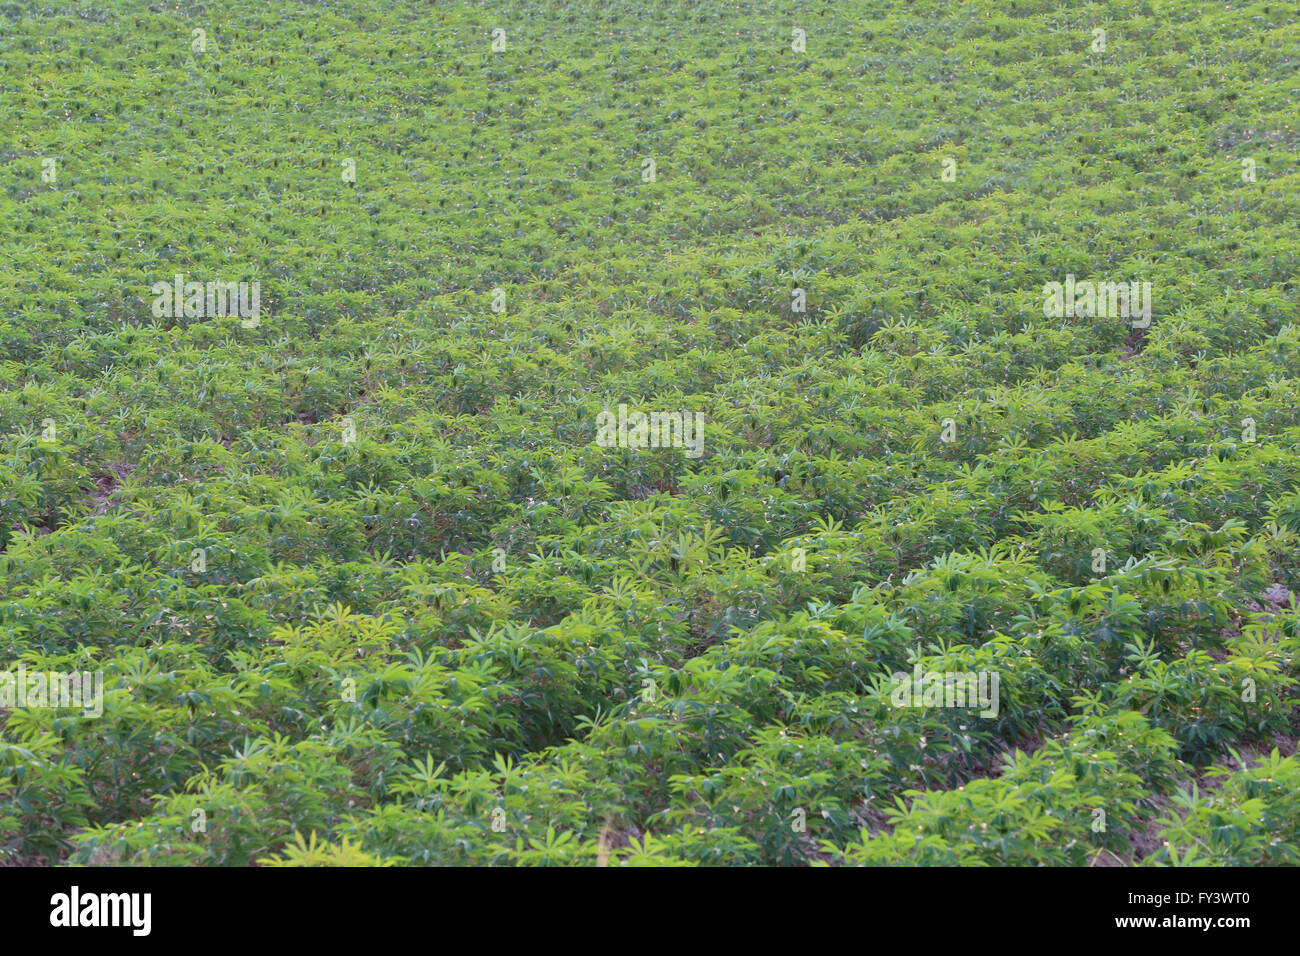 Plantation de manioc dans les zones rurales de l'agriculture de Thaïlande. Banque D'Images